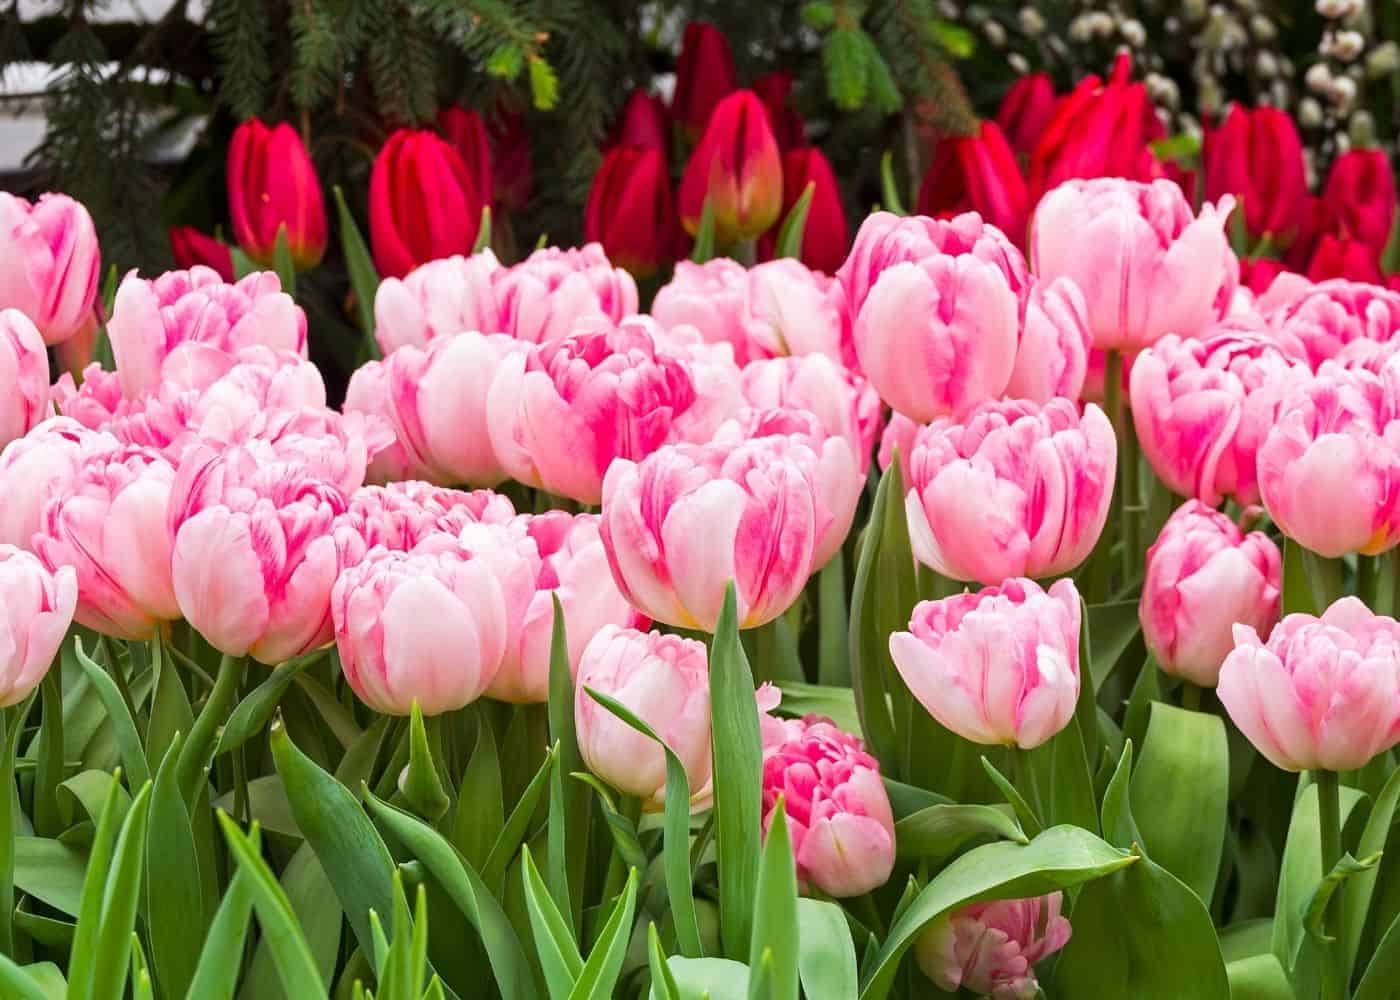 Types of tulips - foxtrot